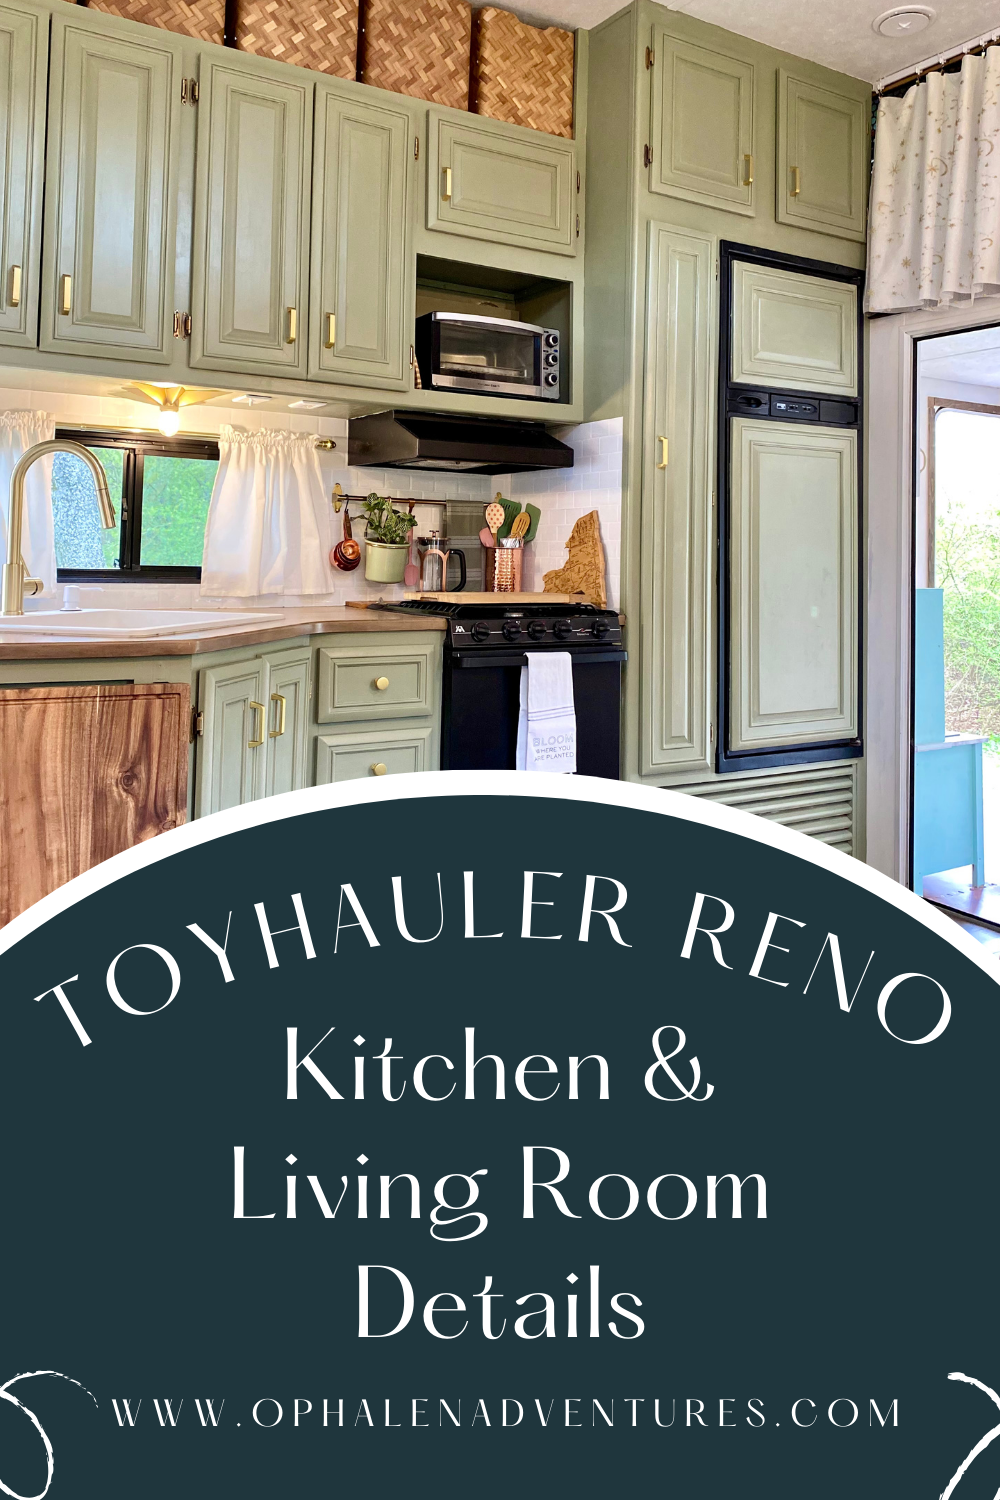 Toyhauler Renovation: Our Gorgeous Kitchen & Living Room